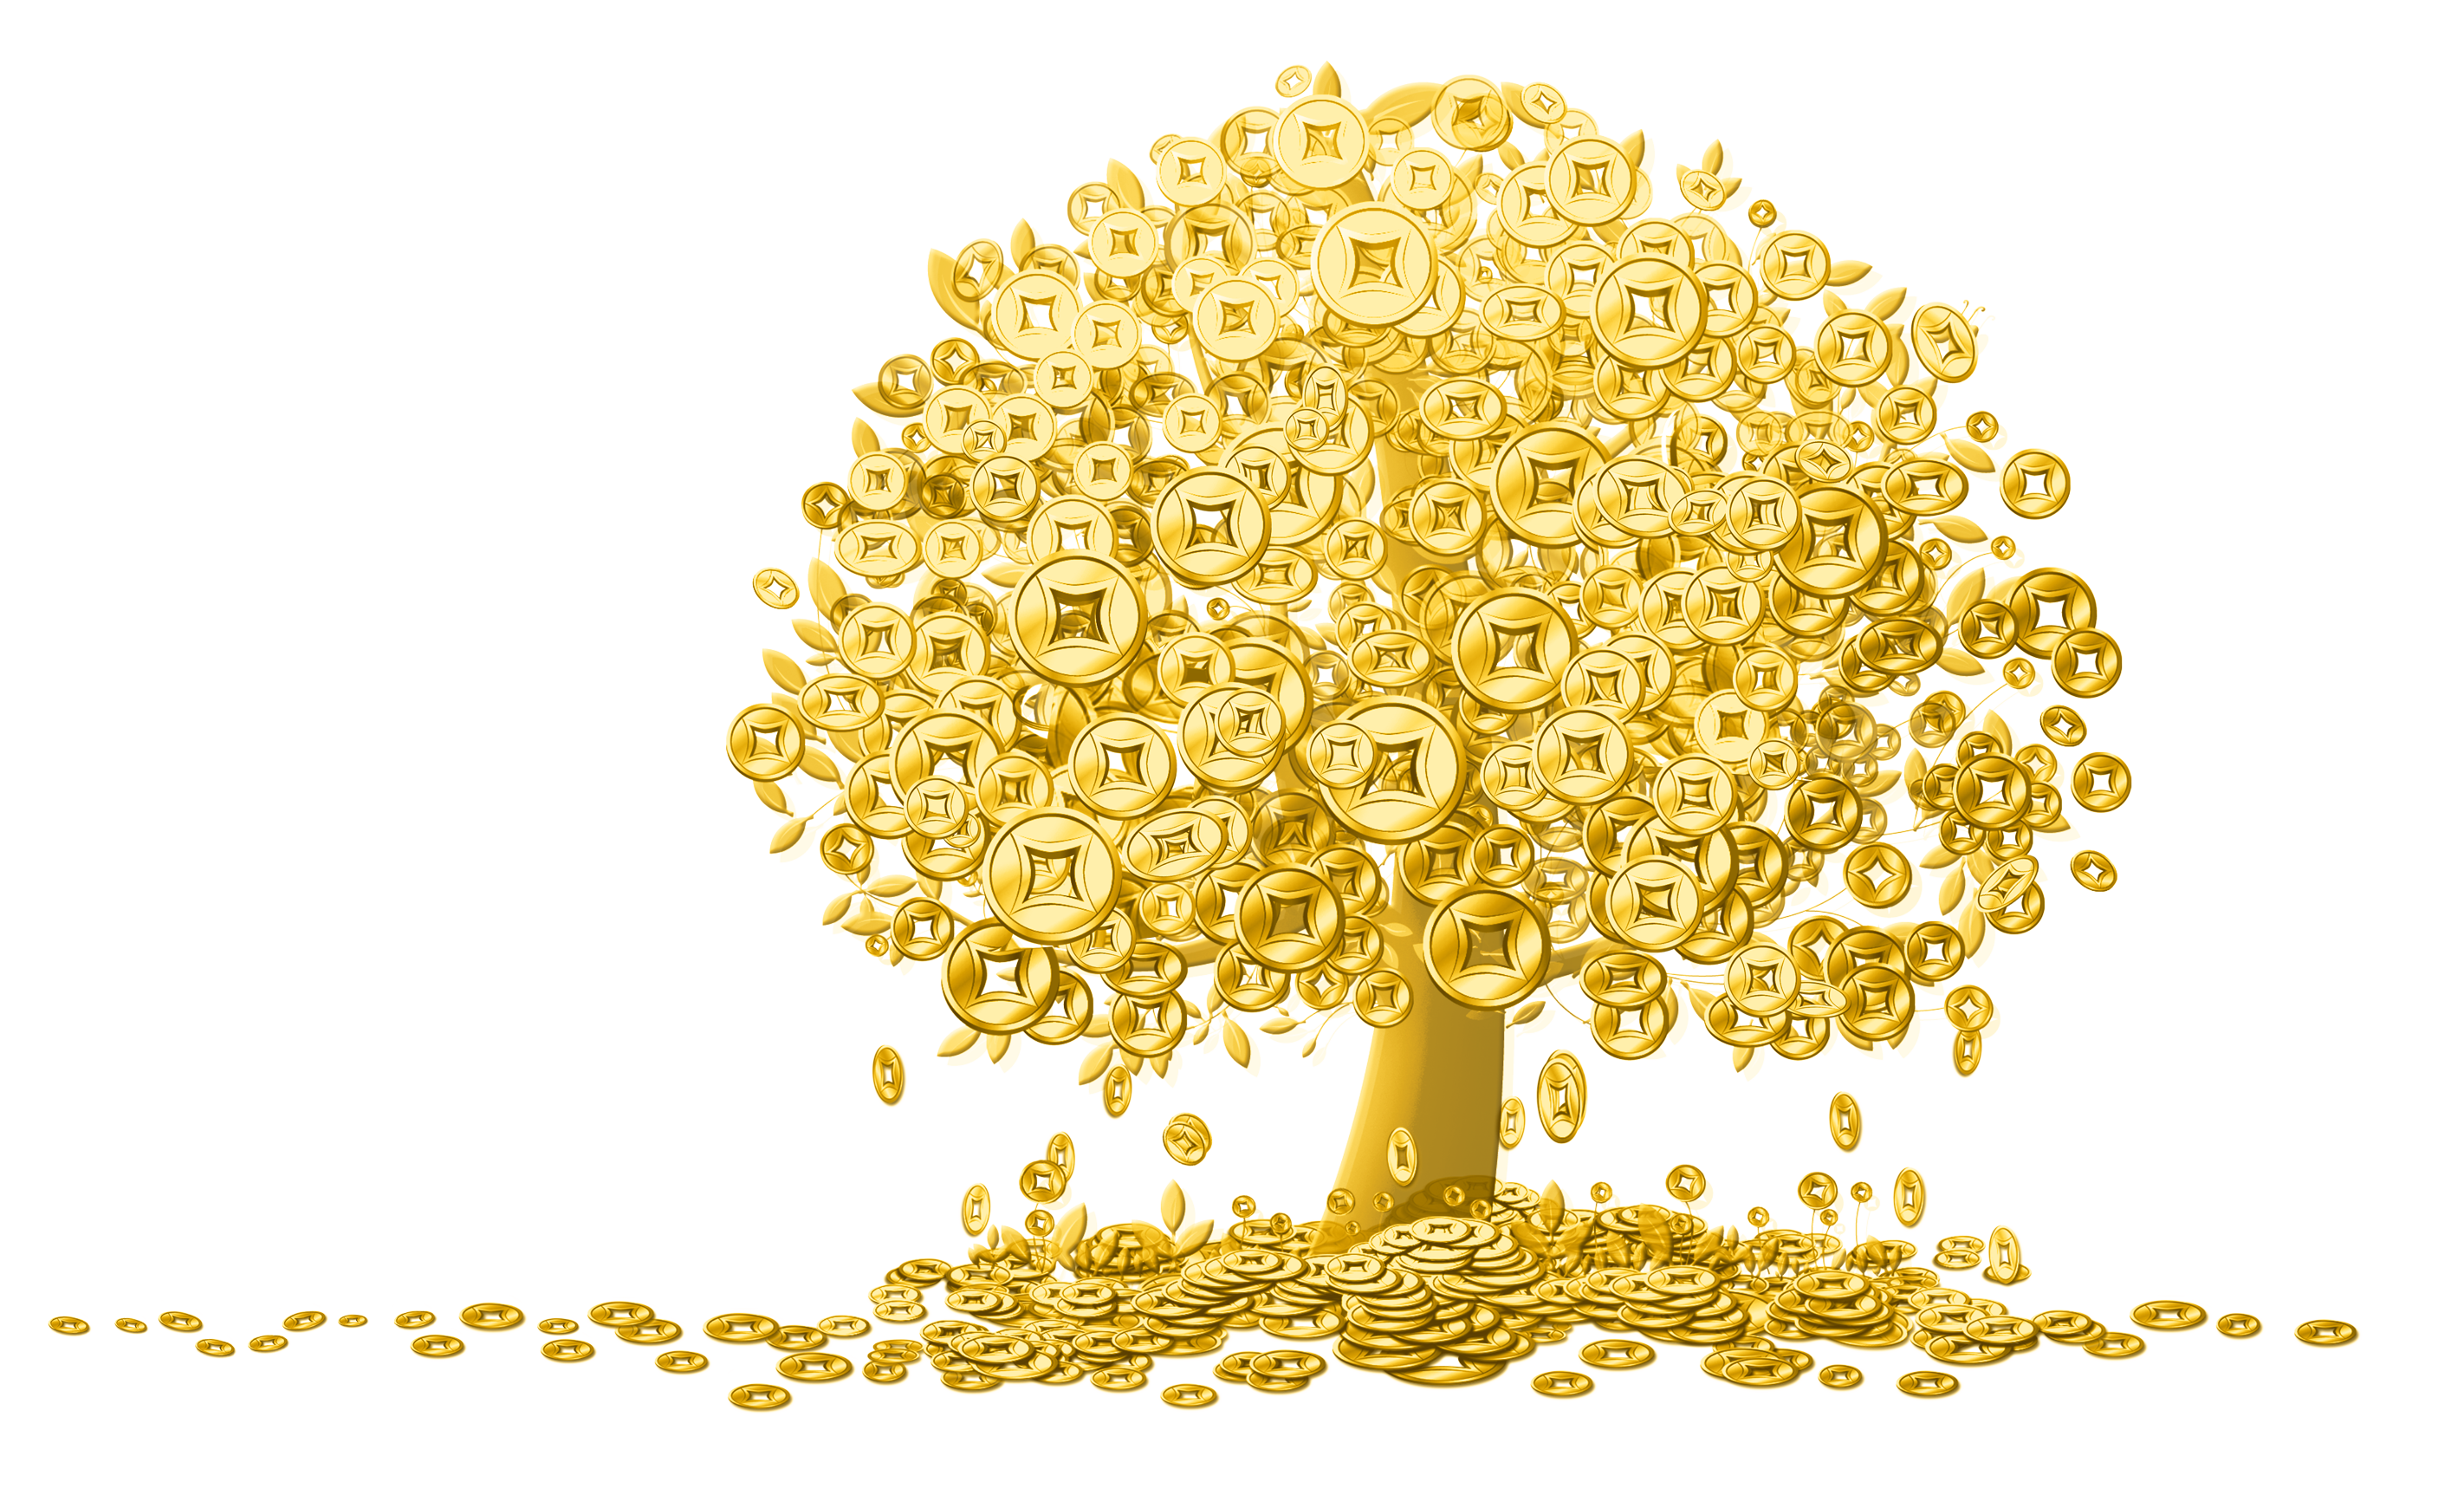 Голд коин дерево. Дерево богатства. Золотое денежное дерево. Денежное дерево с золотыми монетами. Golden tree